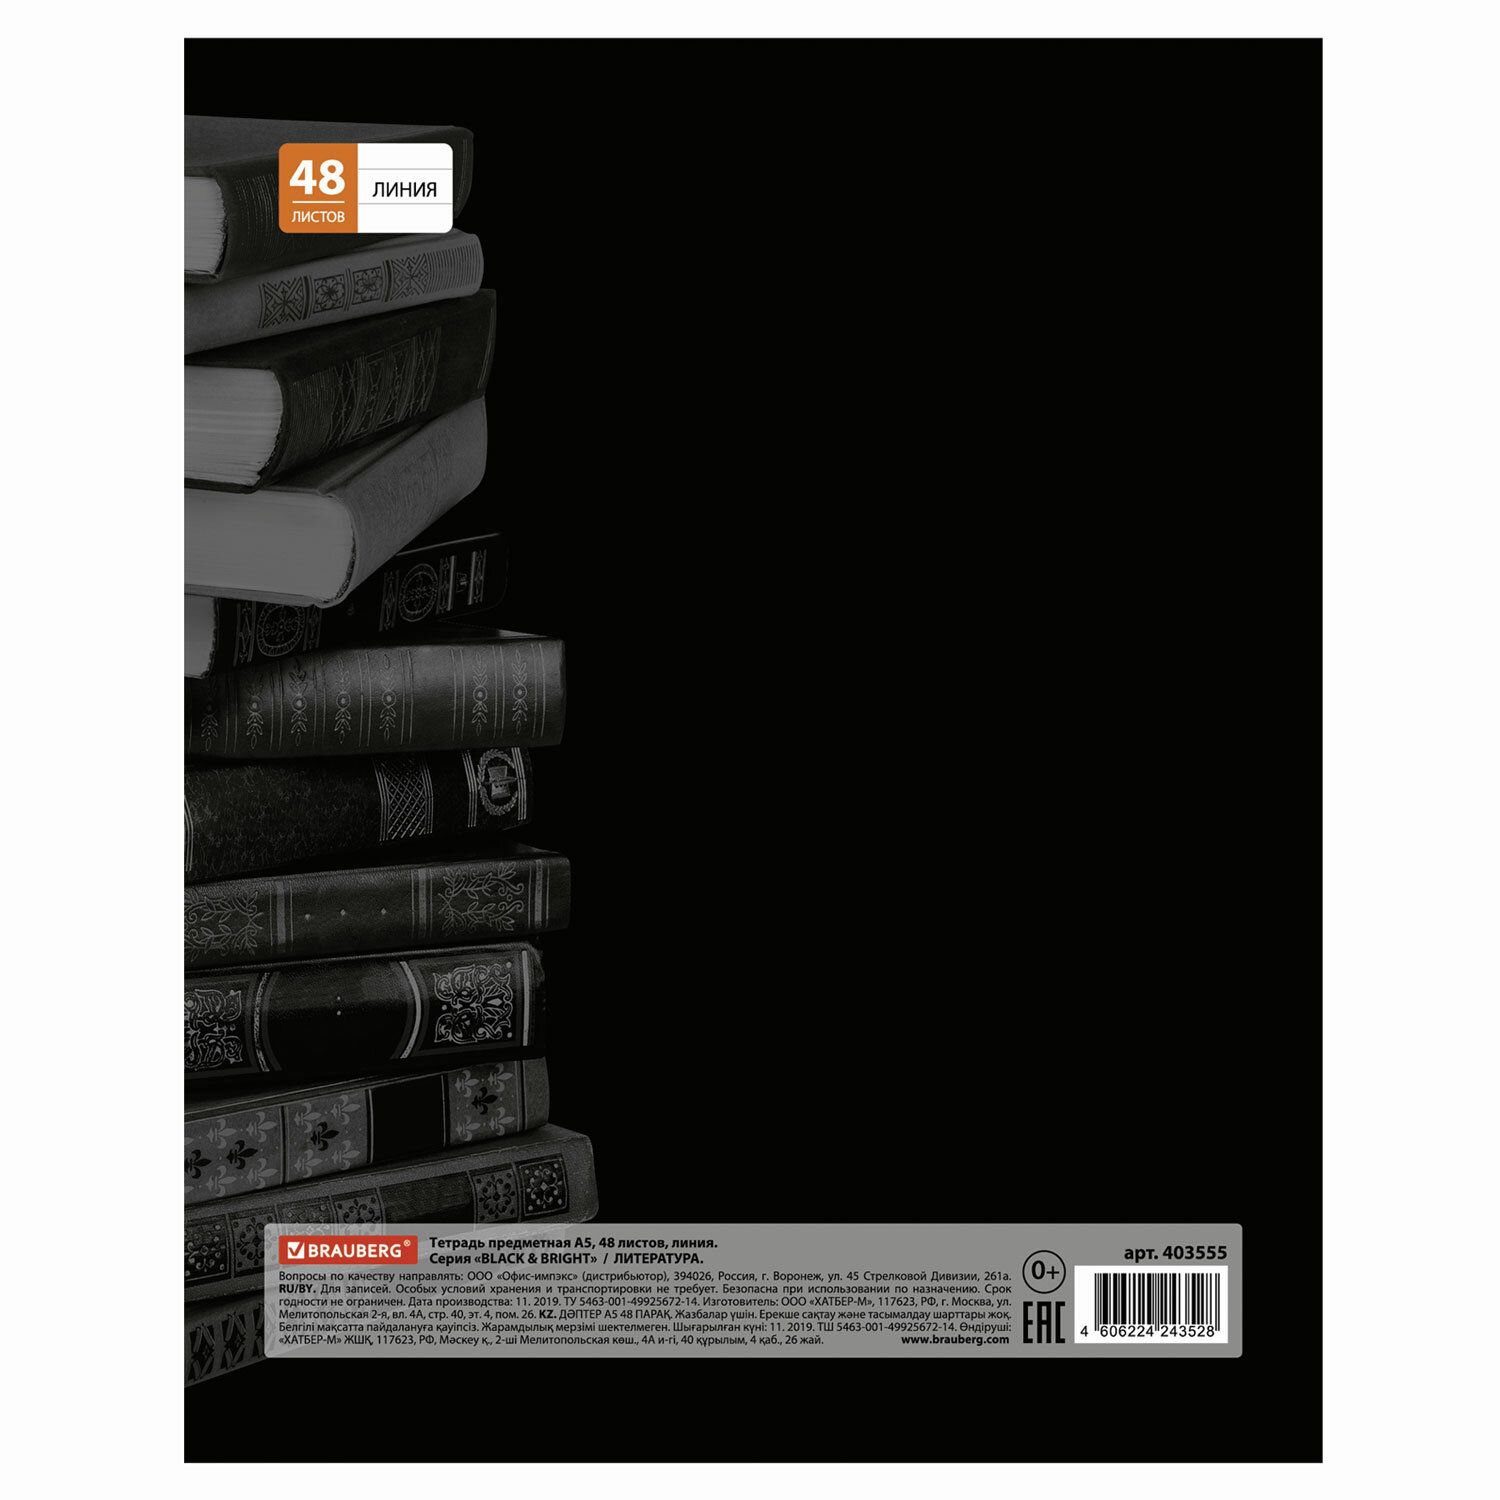 Тетрадь предметная BLACK & BRIGHT 48 листов, глянцевый лак, ЛИТЕРАТУРА, клетка, подсказ, BRAUBERG, 403555